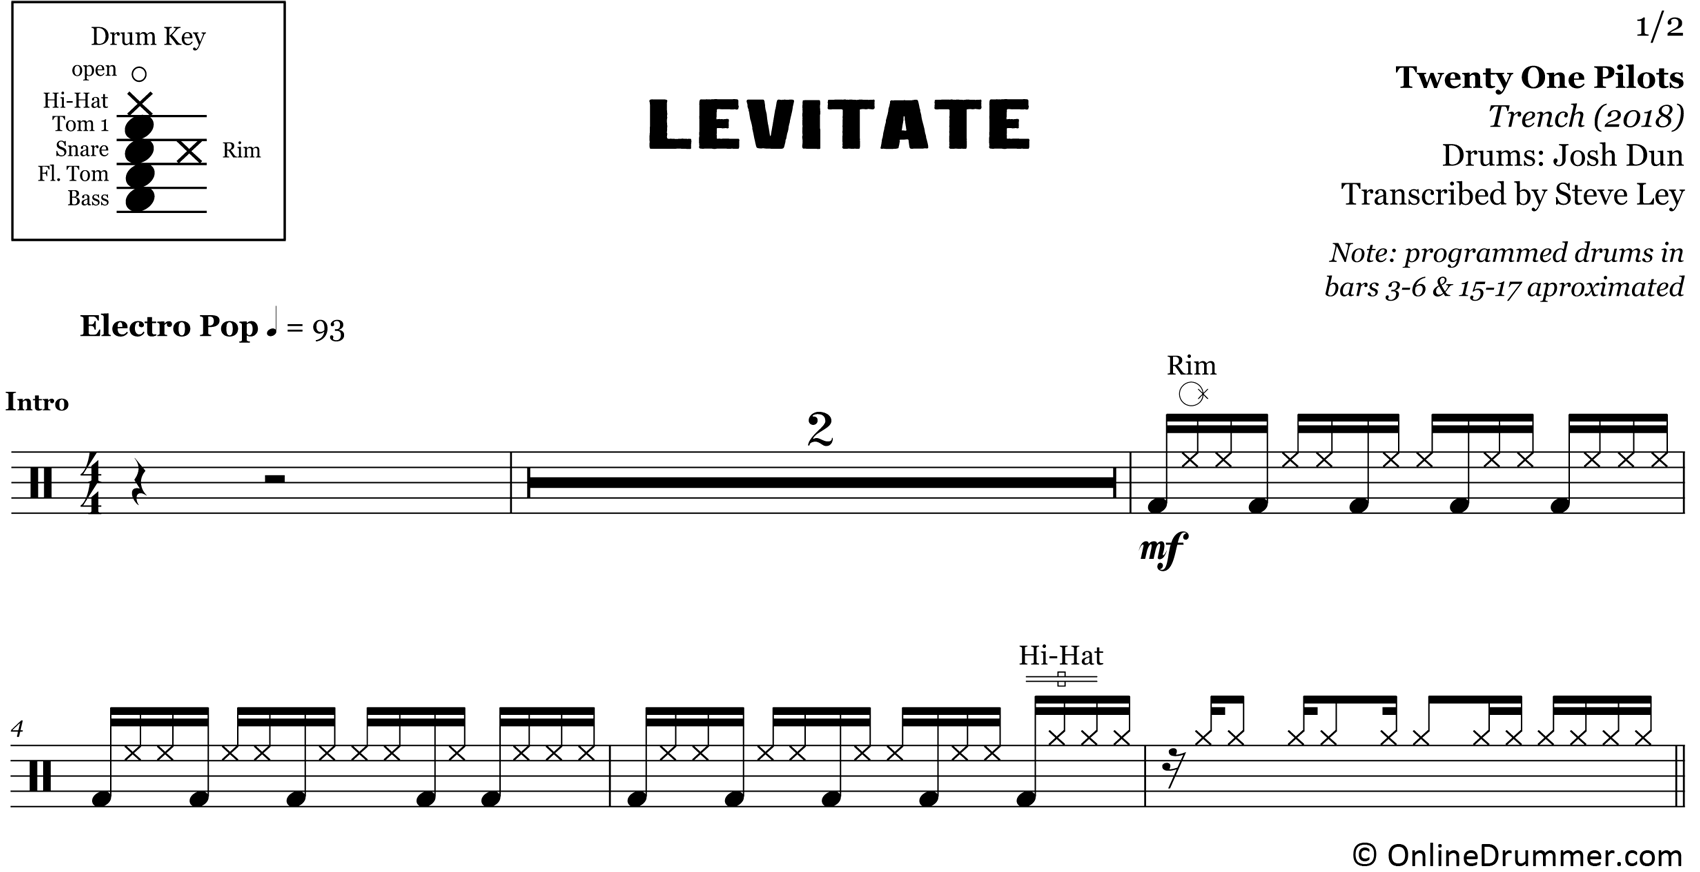 Levitate - Twenty One Pilots - Drum Sheet Music